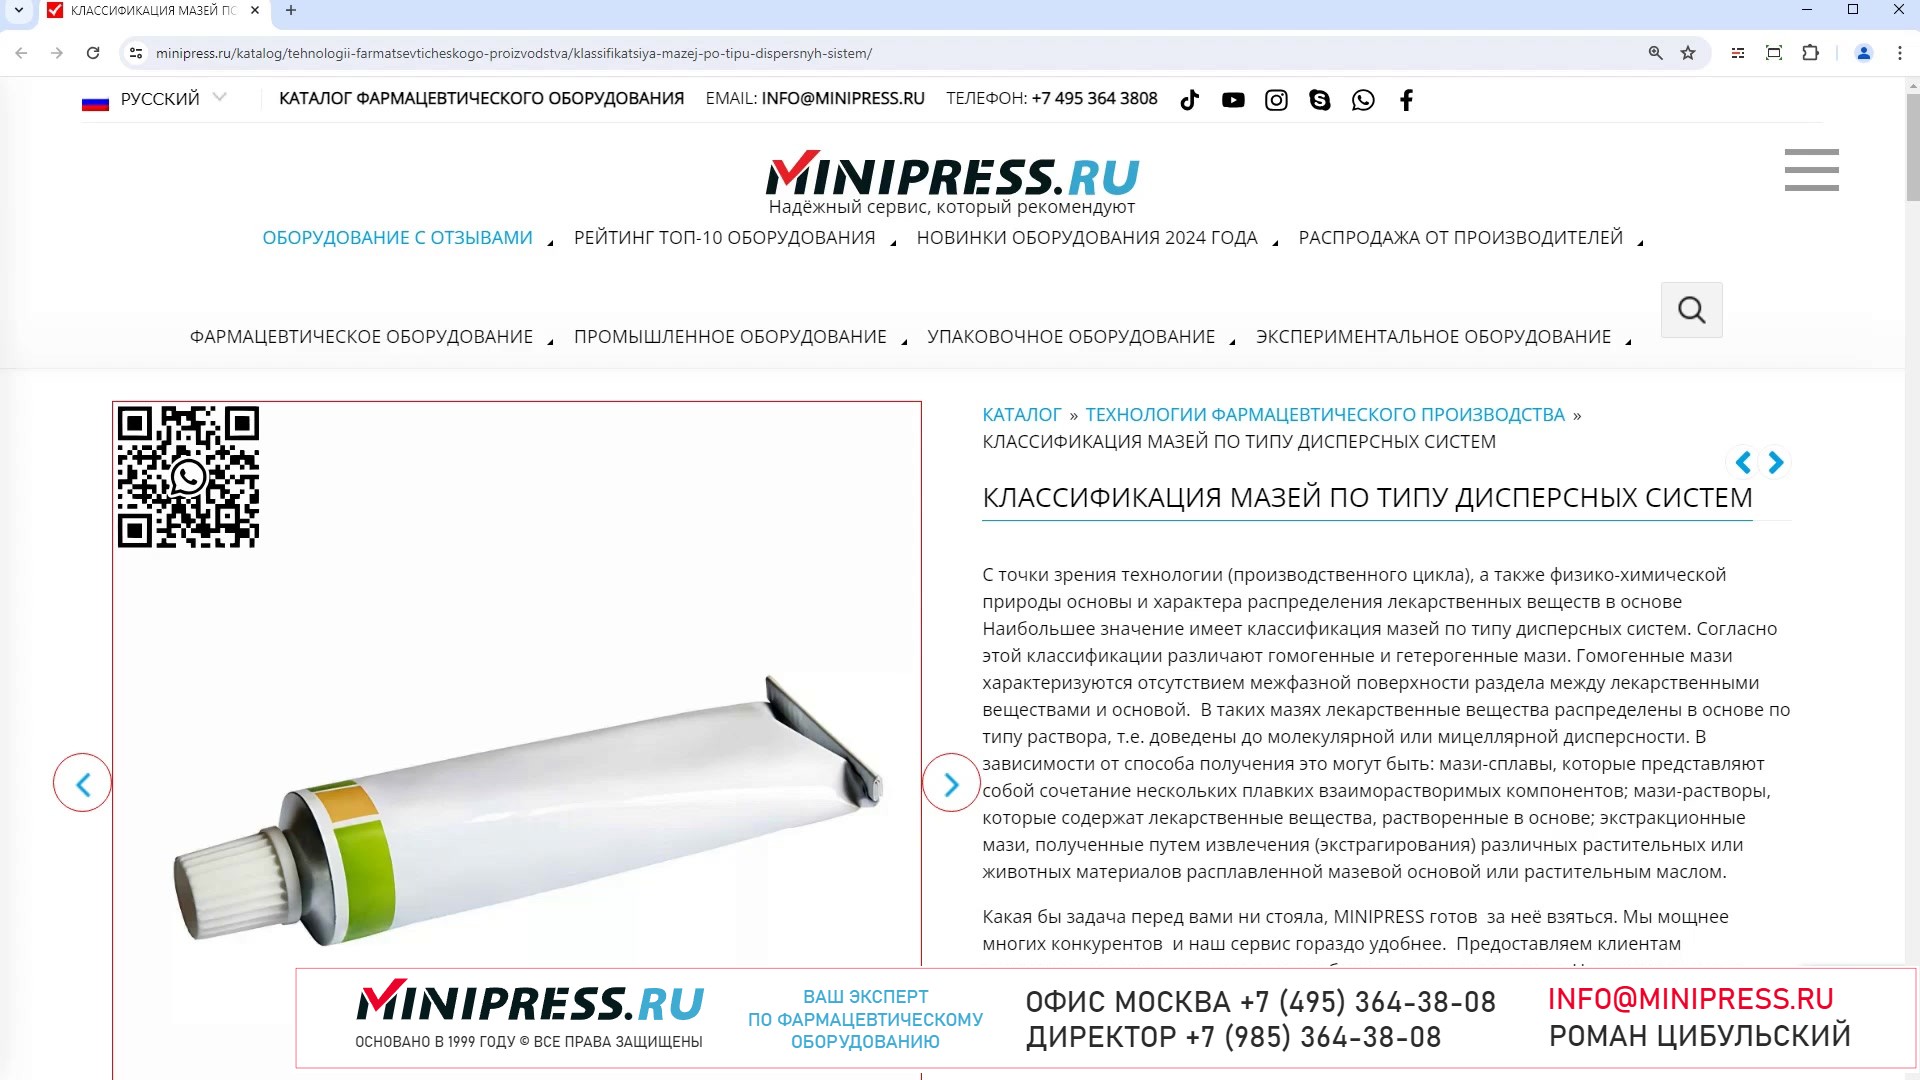 Minipress.ru Классификация мазей по типу дисперсных систем